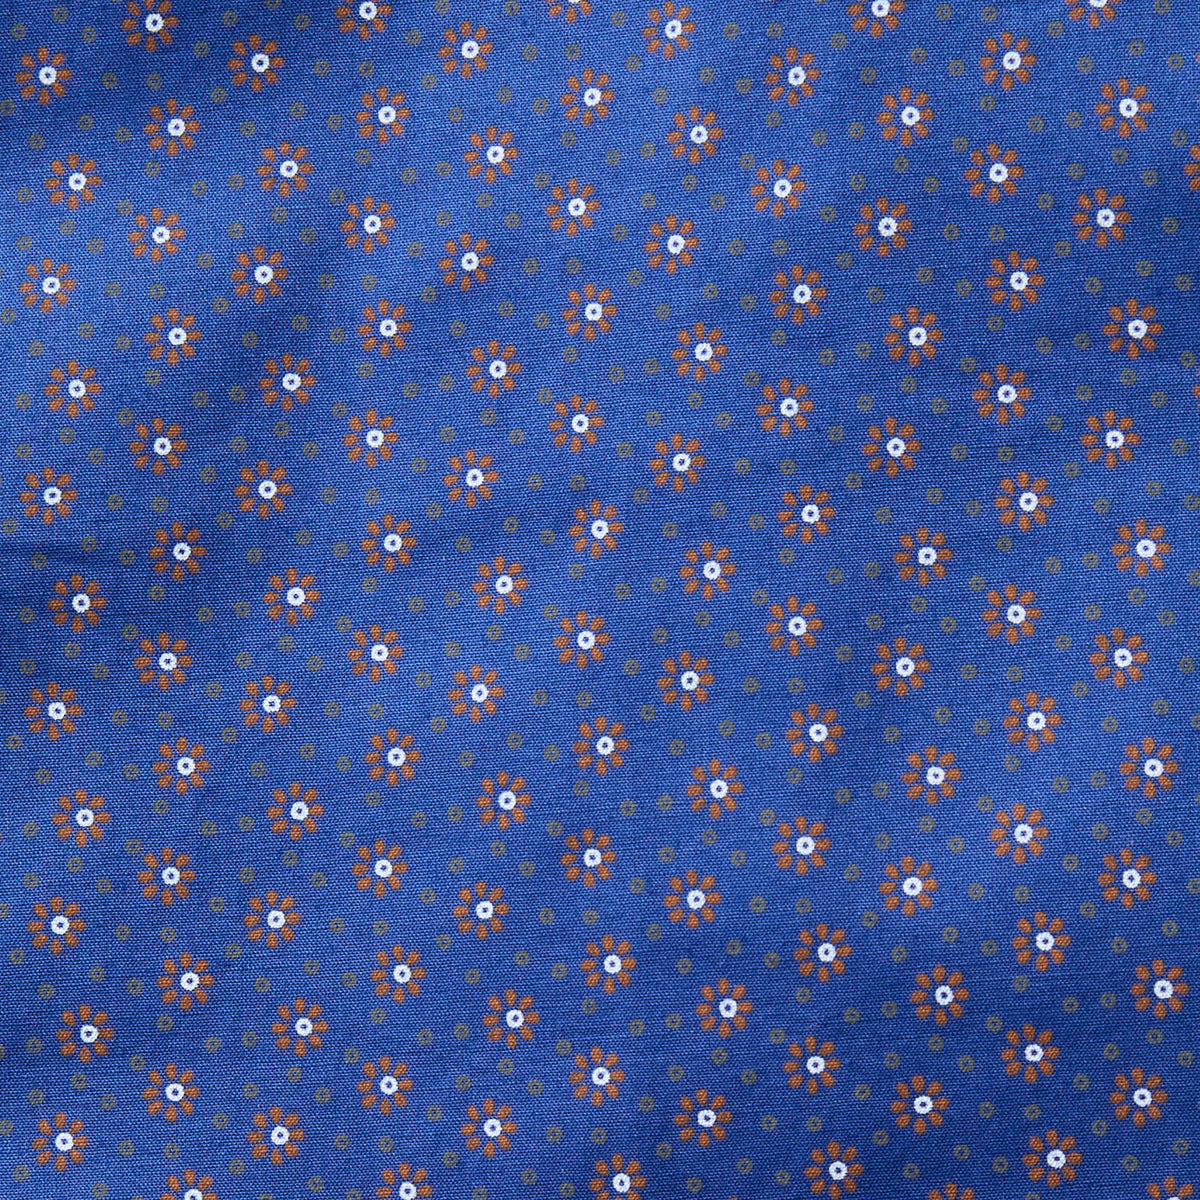 London Men&#39;s Long Sleeve Medium Blue Geo-Print Shirt